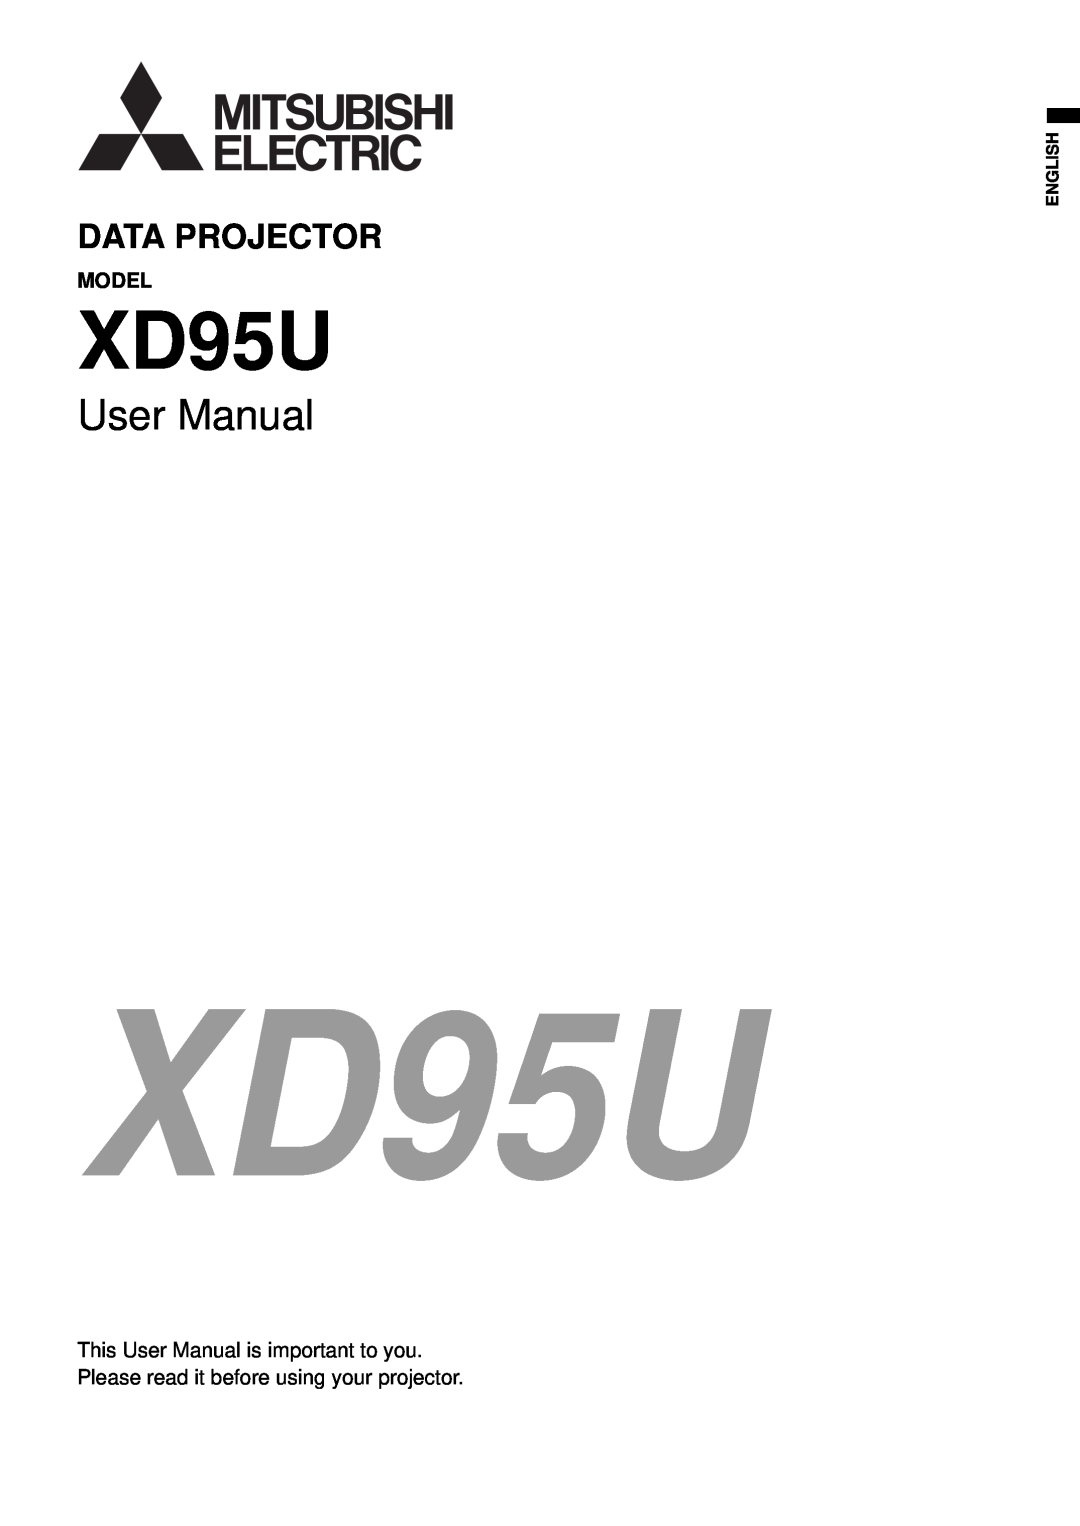 Mitsubishi Electronics XD95U user manual User Manual, Data Projector 